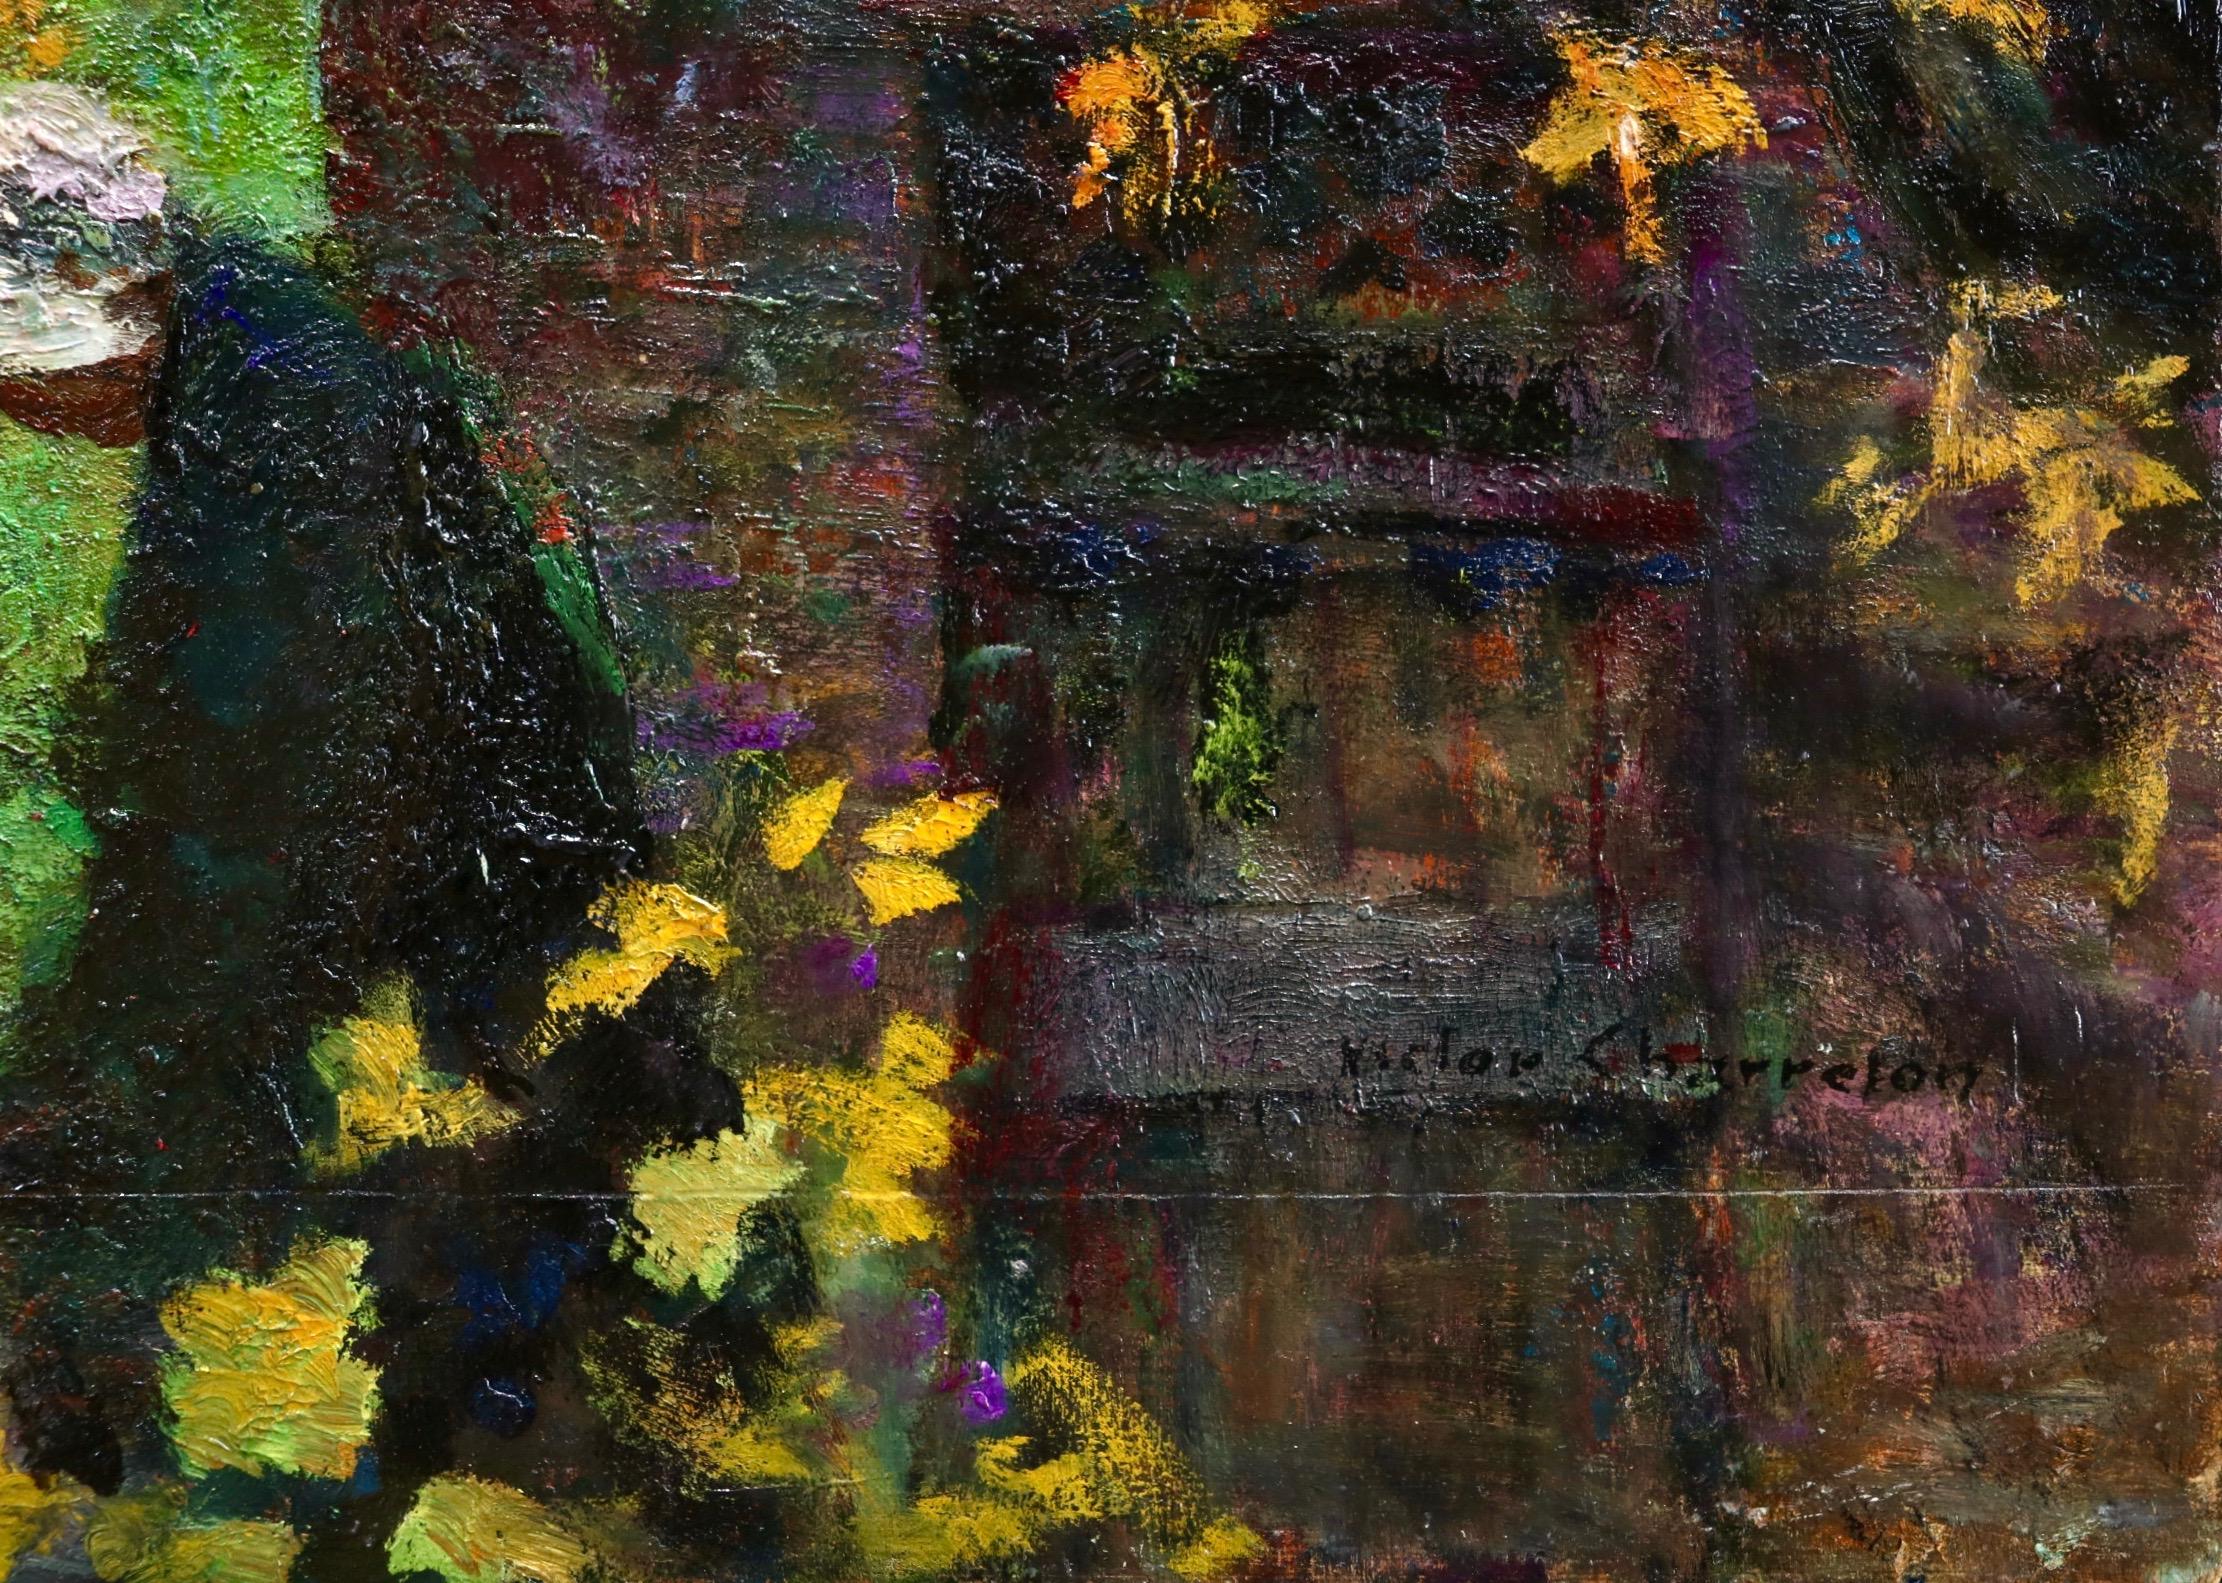 L'automne - Impressionist Oil, Figure in Autumn Landscape by Victor Charreton 1